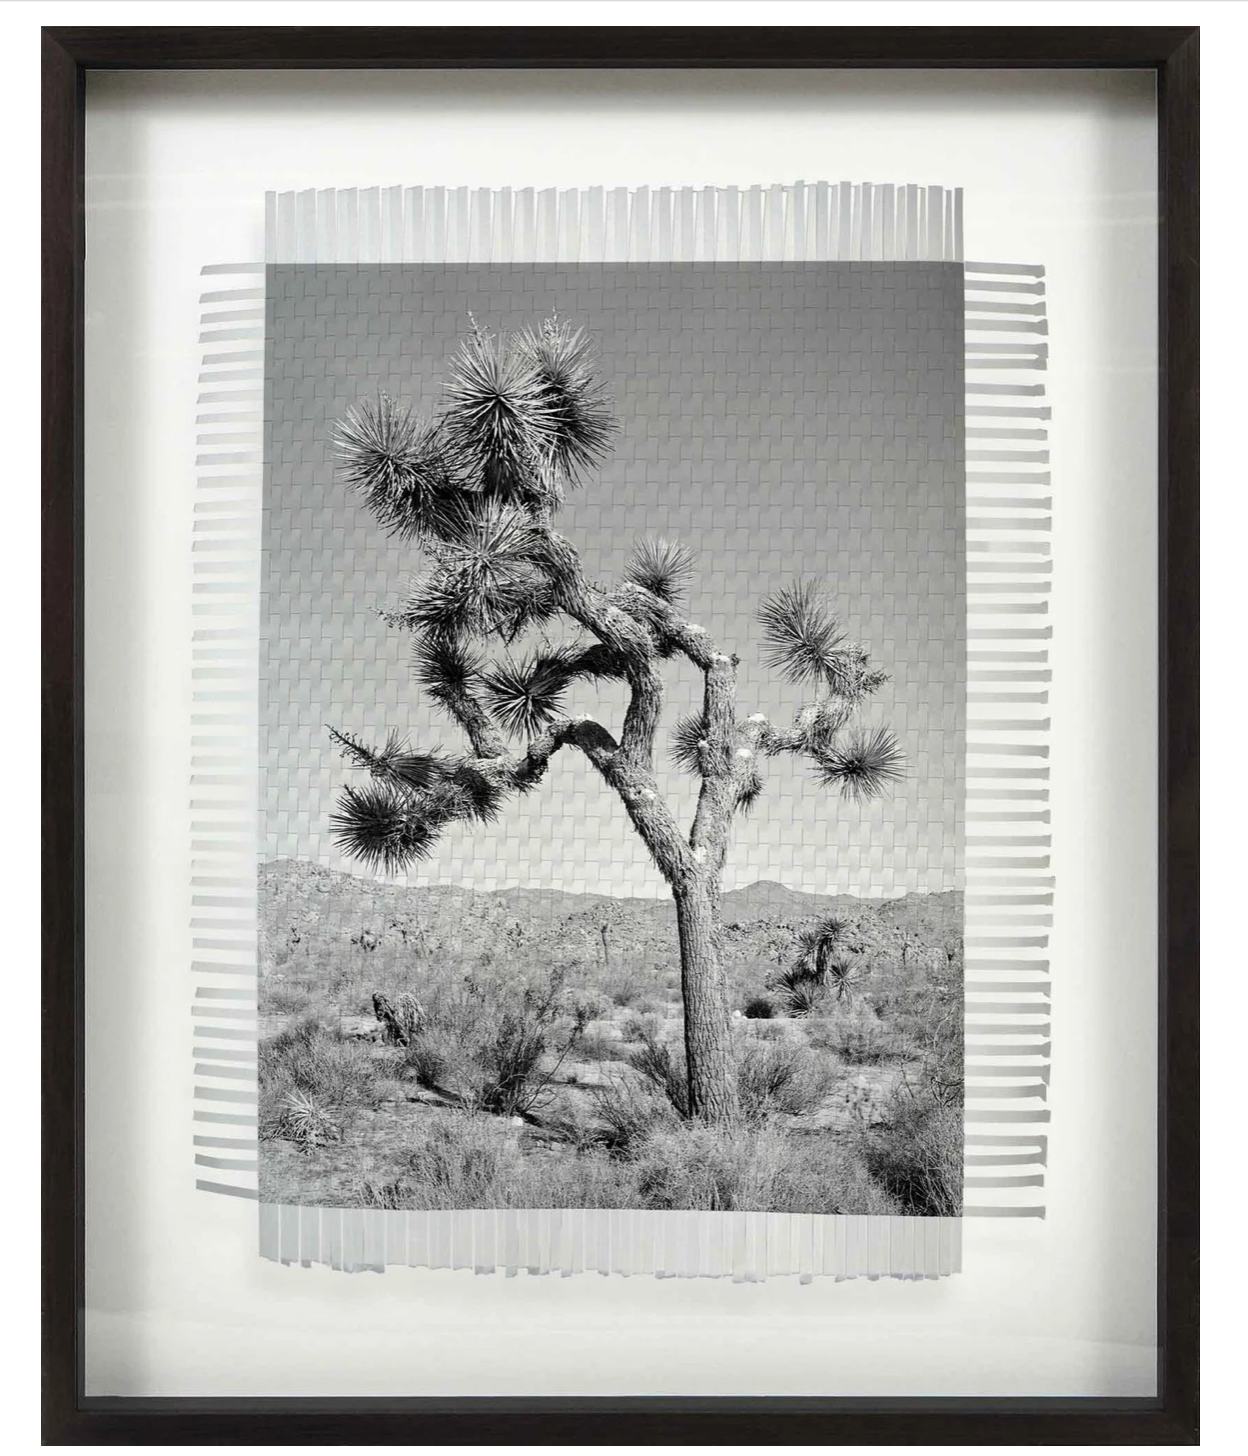 Framed Art - KARMA TREE 4